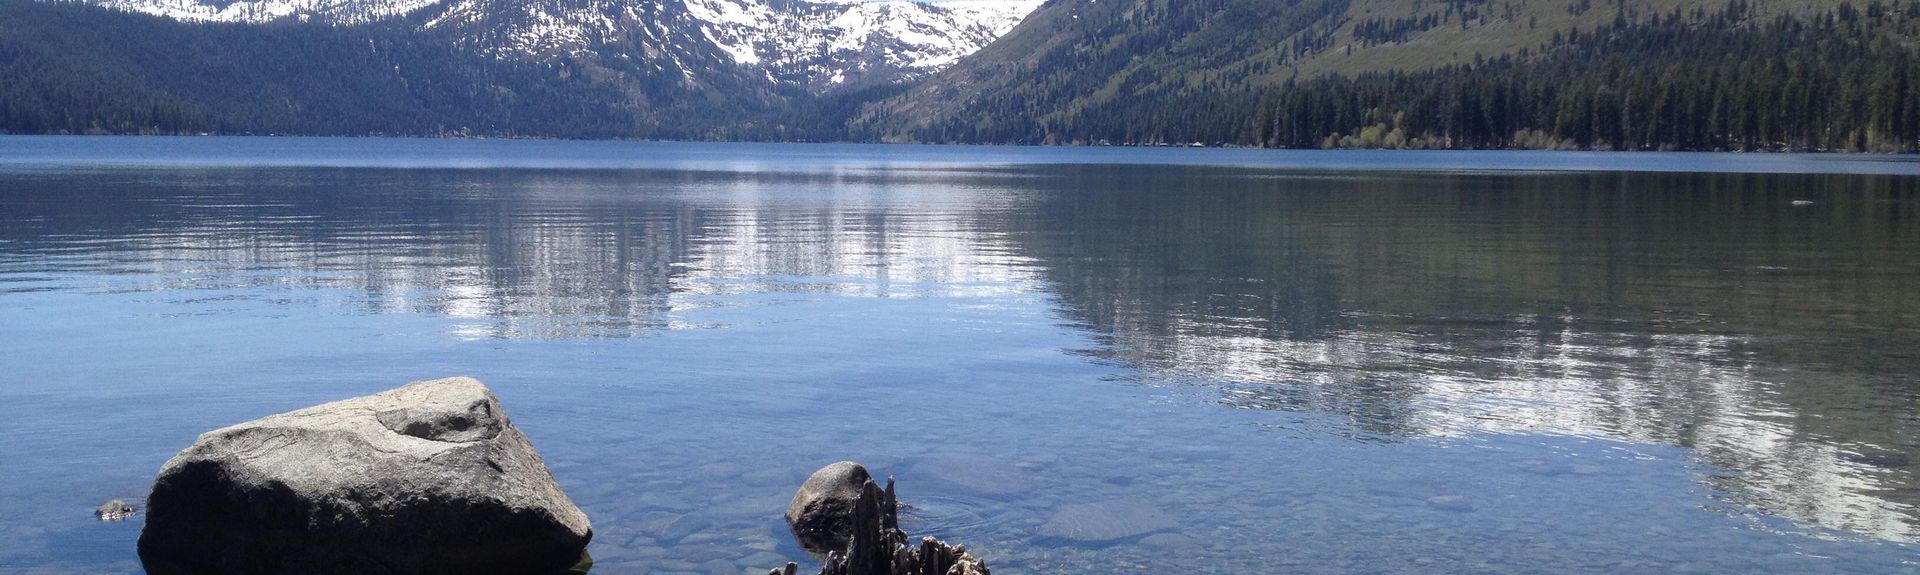 google maps fallen leaf lake california